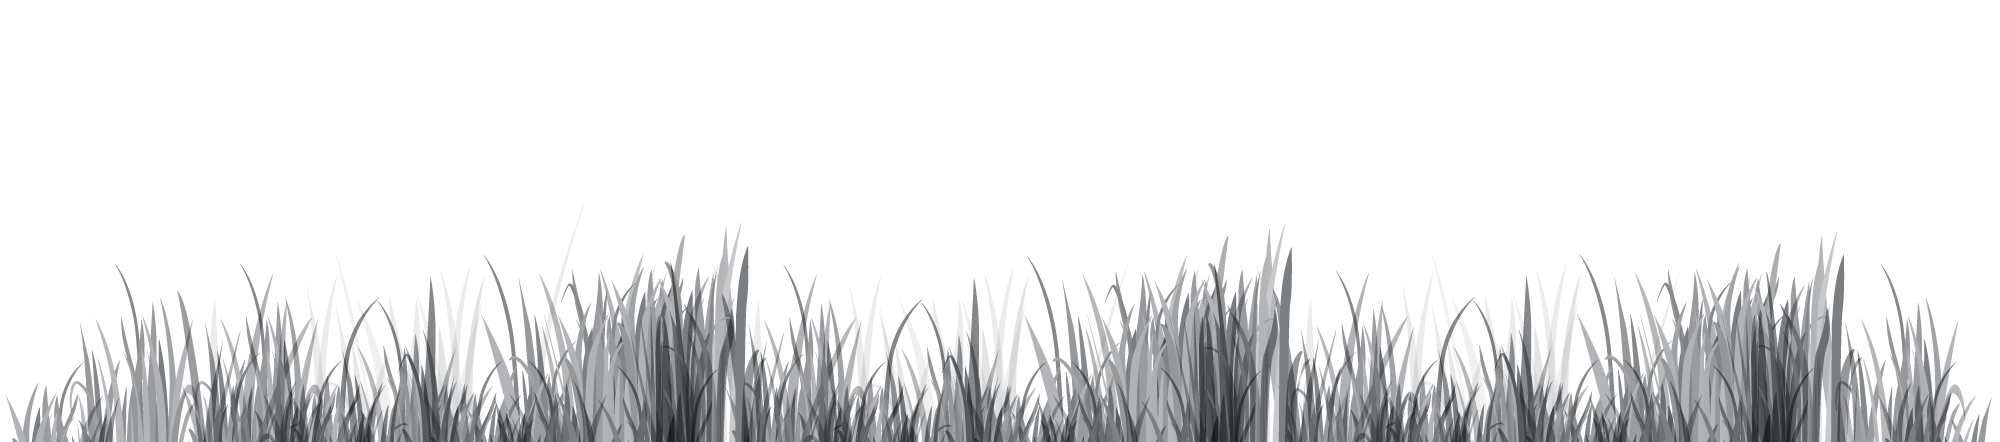 grass background layer